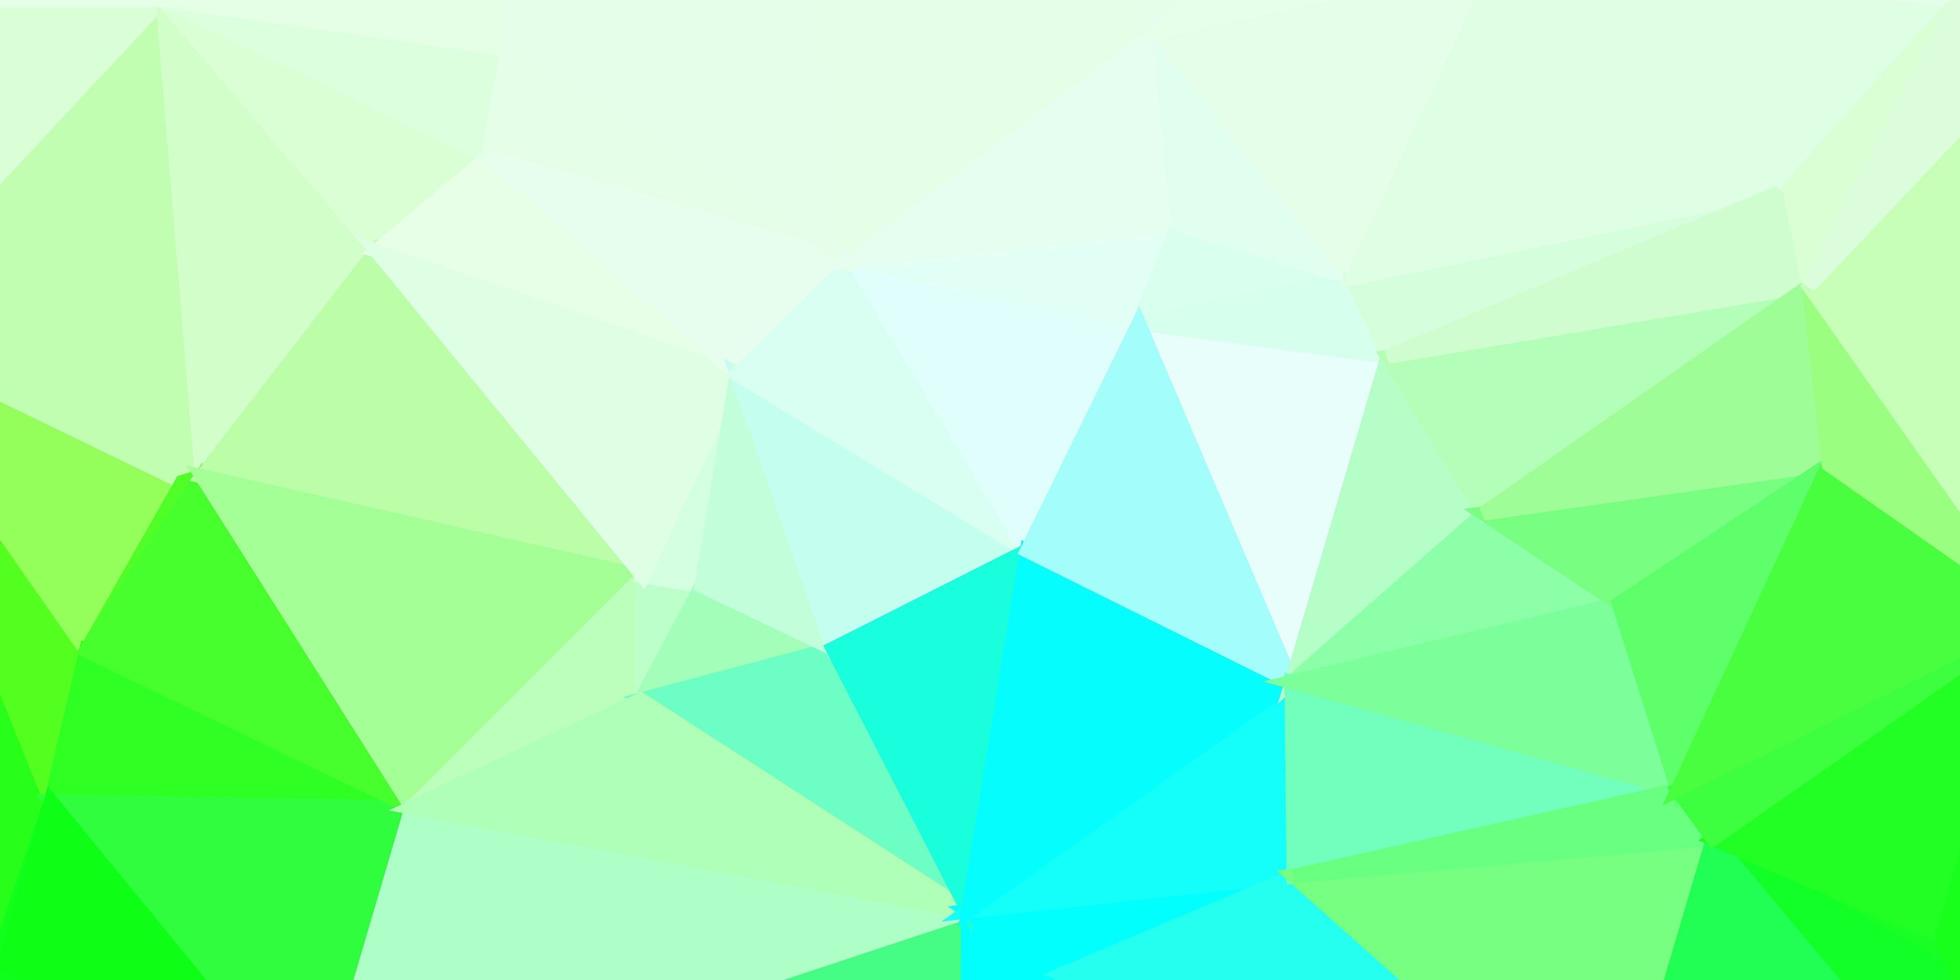 papel de parede poligonal geométrico de vetor verde claro.